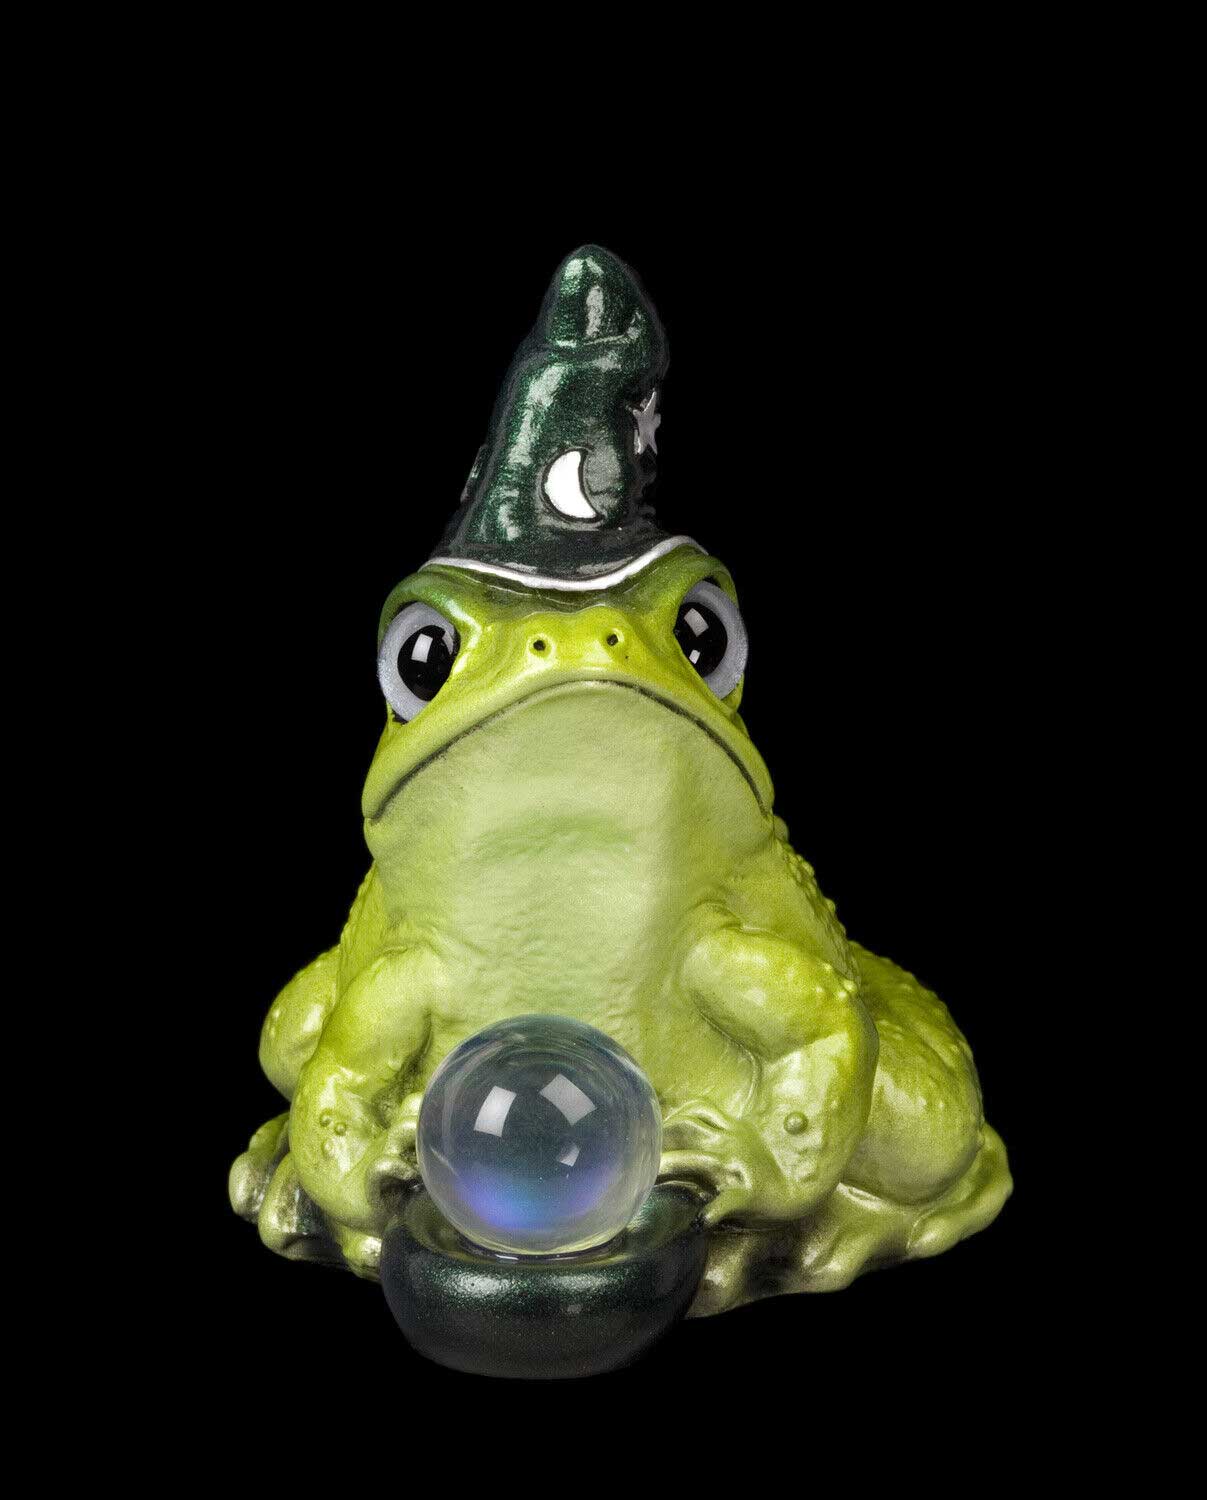 20221123-Twilight-Peridot-Frog-Wizard-Test-Paint-1-by-Gina